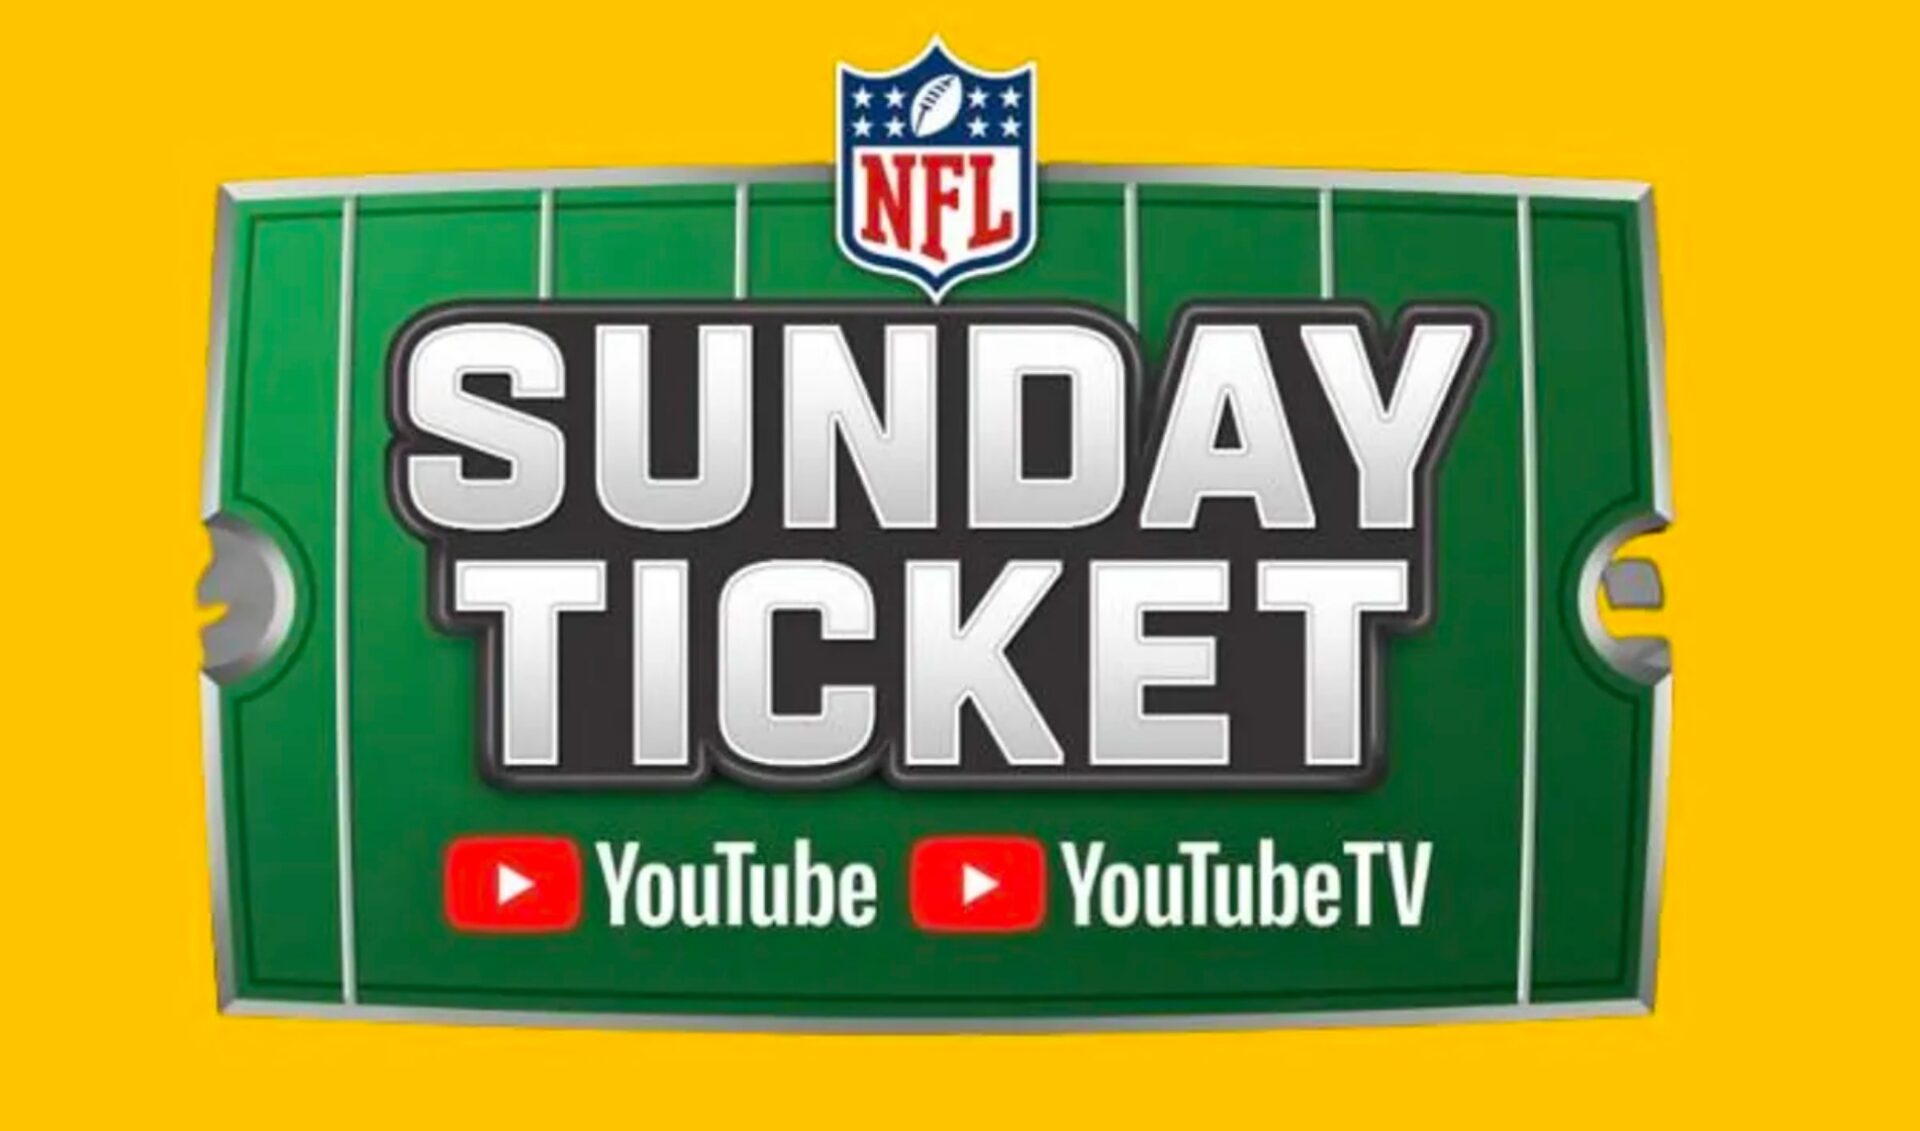 YouTube enjoys early success with NFL Sunday Ticket, helps Alphabet beat earnings estimates